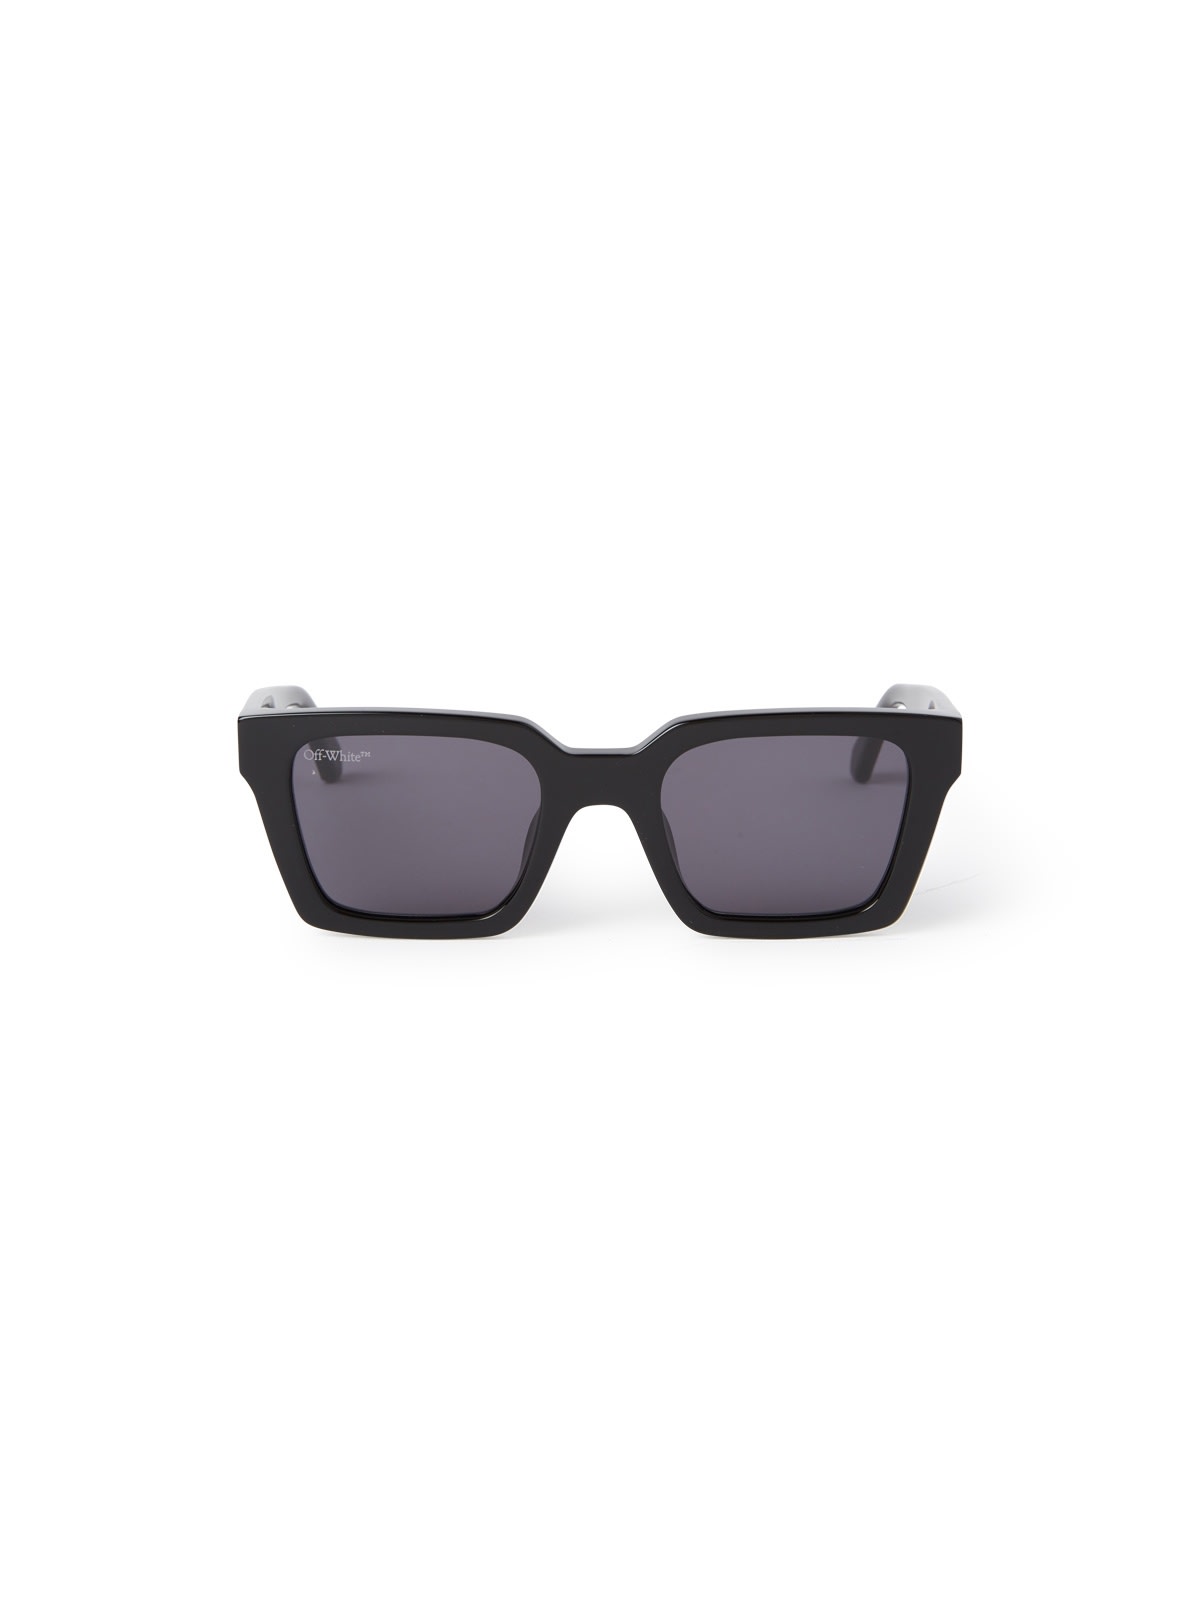 Off-White OERI086 PALERMO Sunglasses サングラス-